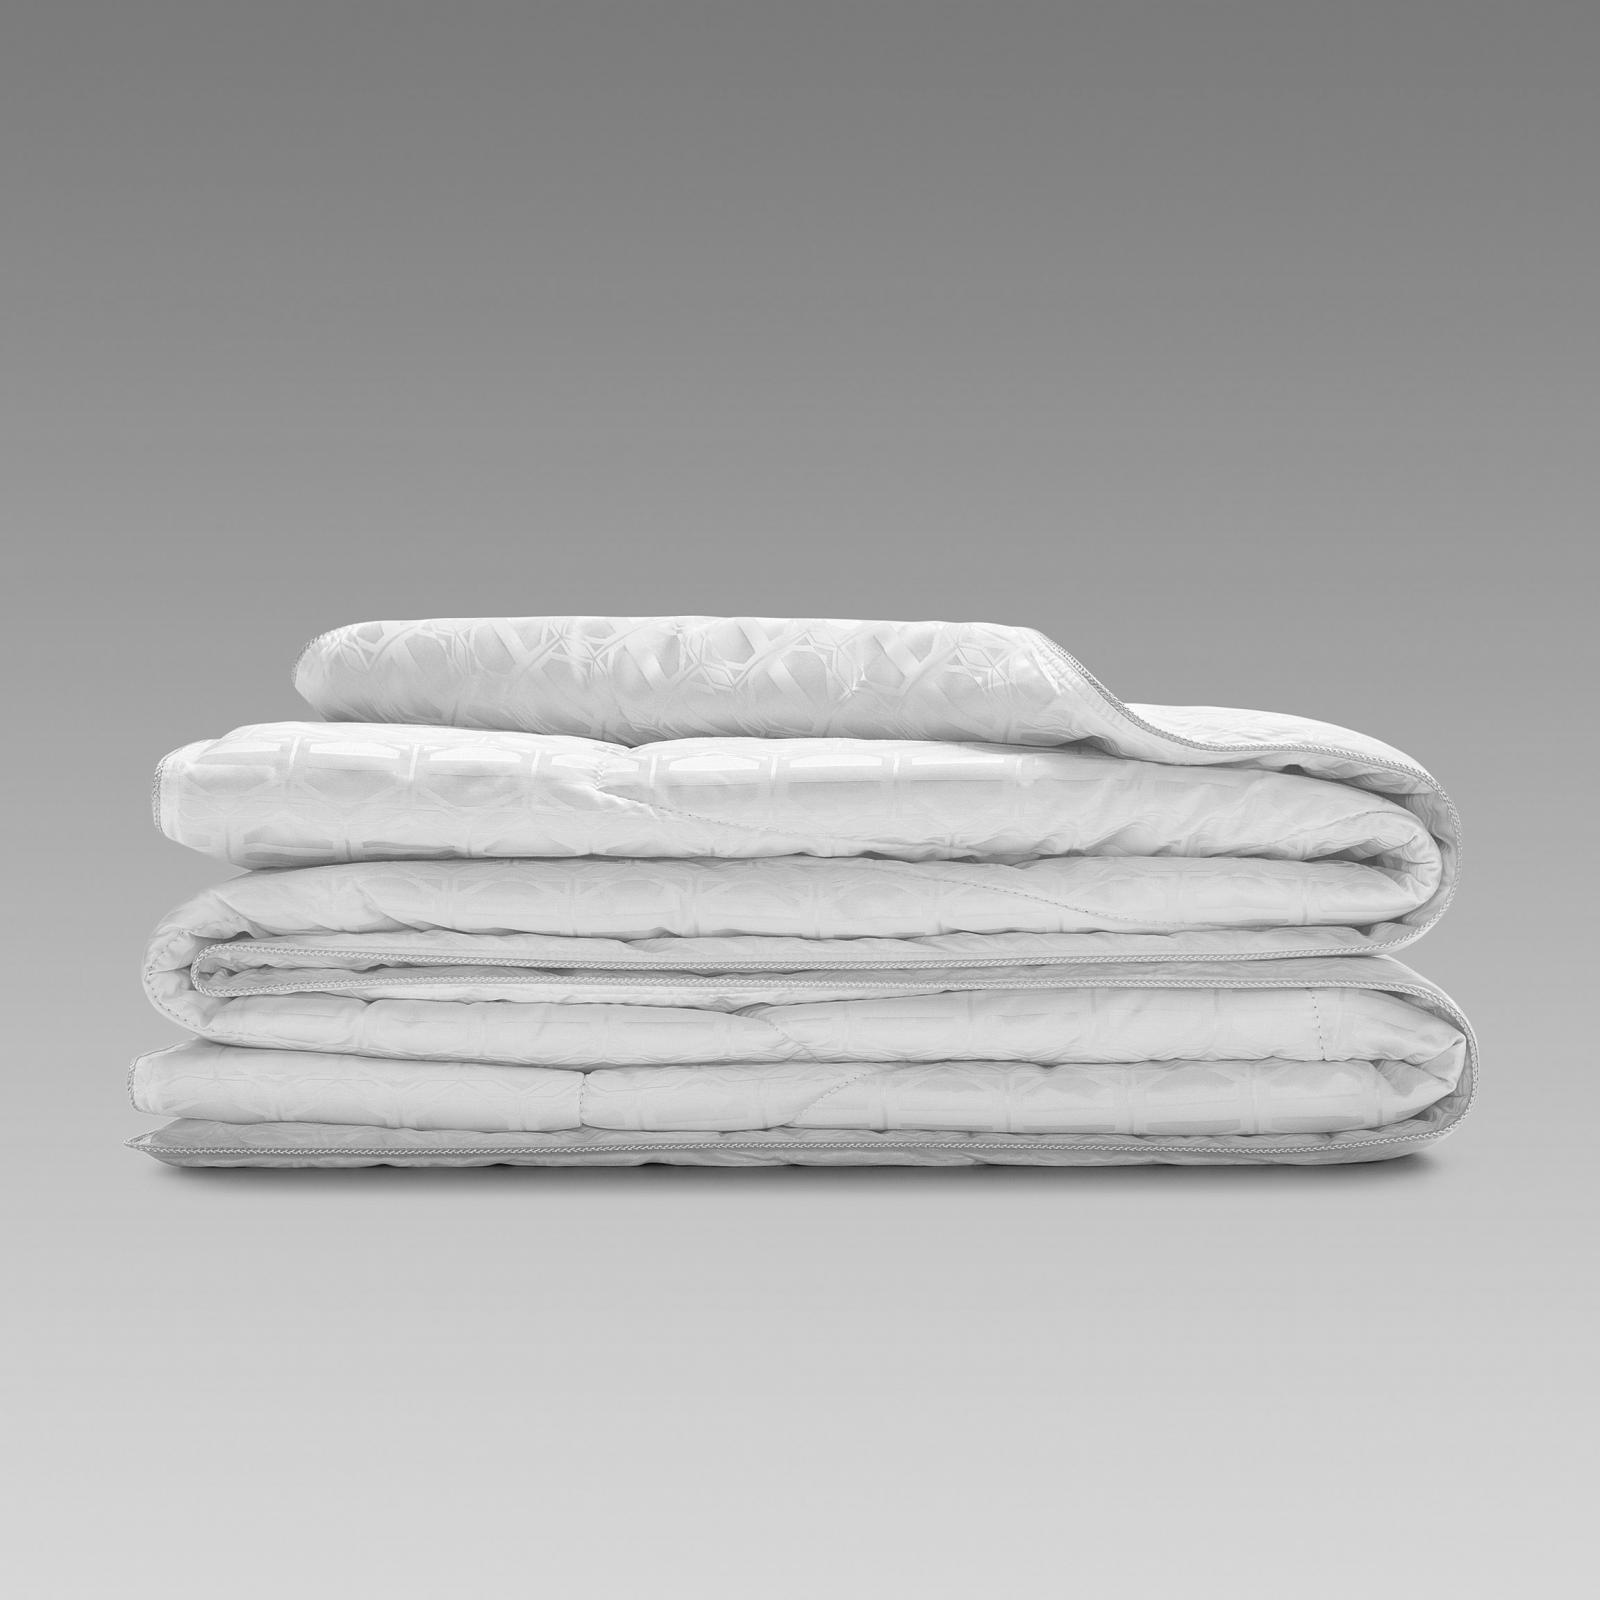 Одеяло Виенто Togas 140х200, размер 140х200 см - фото 5